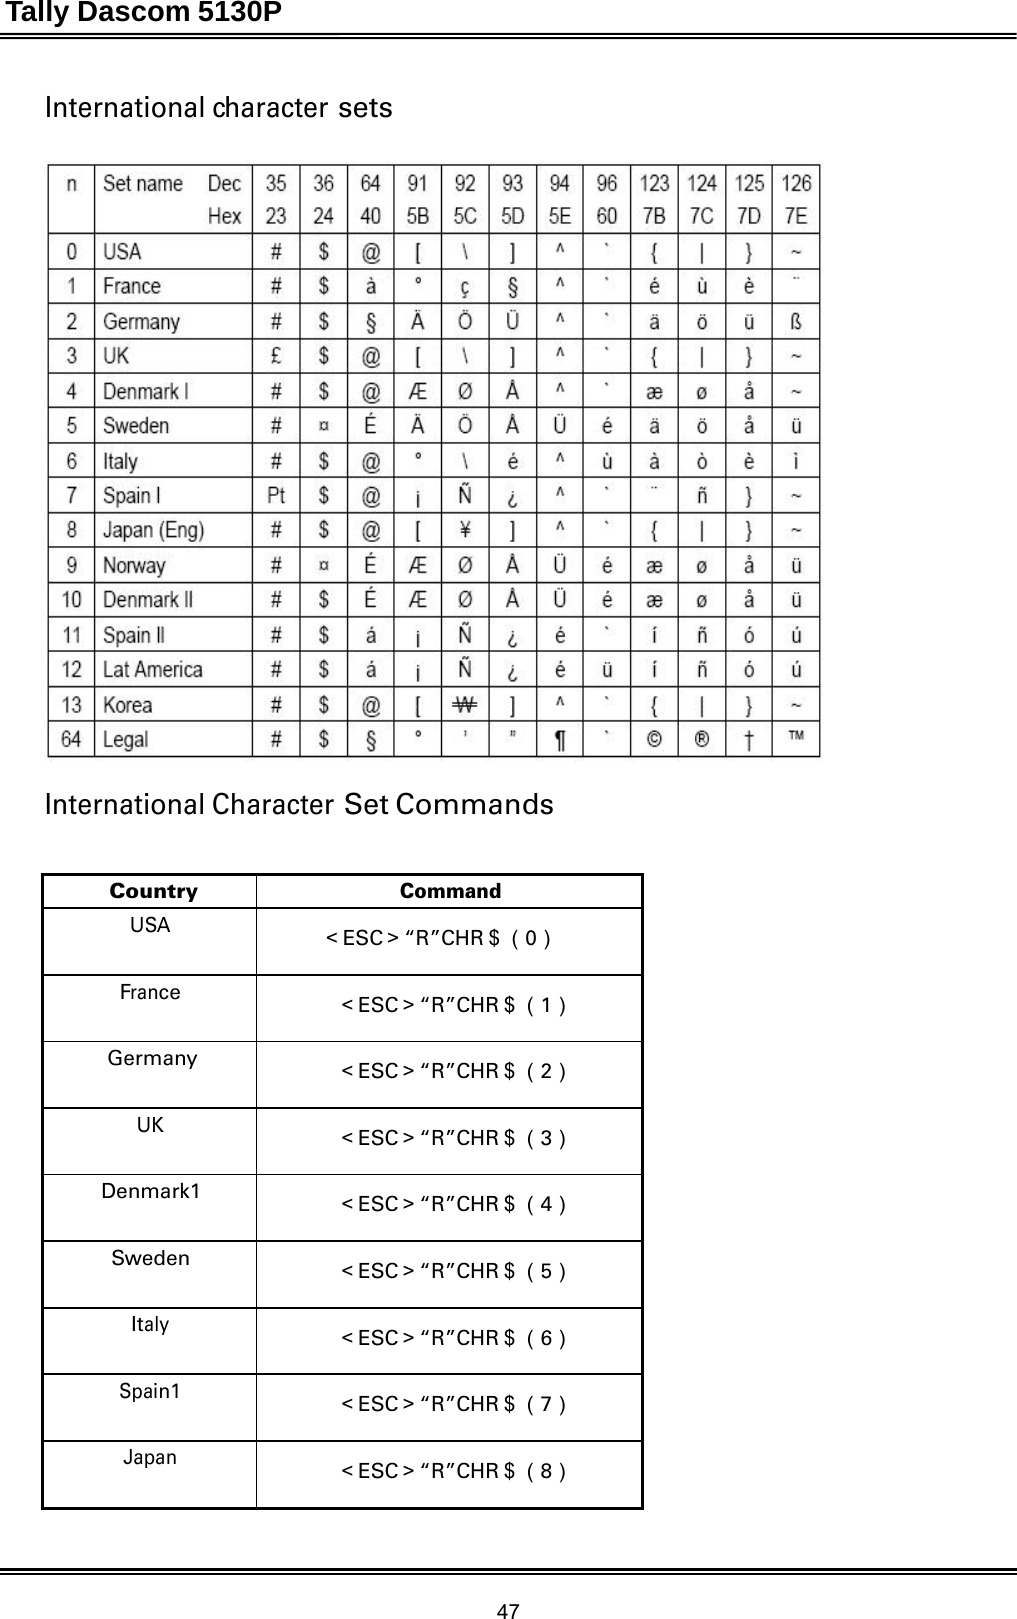 Tally Dascom 5130P 47  International character sets     International Character Set Commands   Country Command USA ＜ESC＞“R”CHR＄（0） France ＜ESC＞“R”CHR＄（1） Germany ＜ESC＞“R”CHR＄（2） UK ＜ESC＞“R”CHR＄（3） Denmark1 ＜ESC＞“R”CHR＄（4） Sweden ＜ESC＞“R”CHR＄（5） Italy ＜ESC＞“R”CHR＄（6） Spain1 ＜ESC＞“R”CHR＄（7） Japan ＜ESC＞“R”CHR＄（8） 